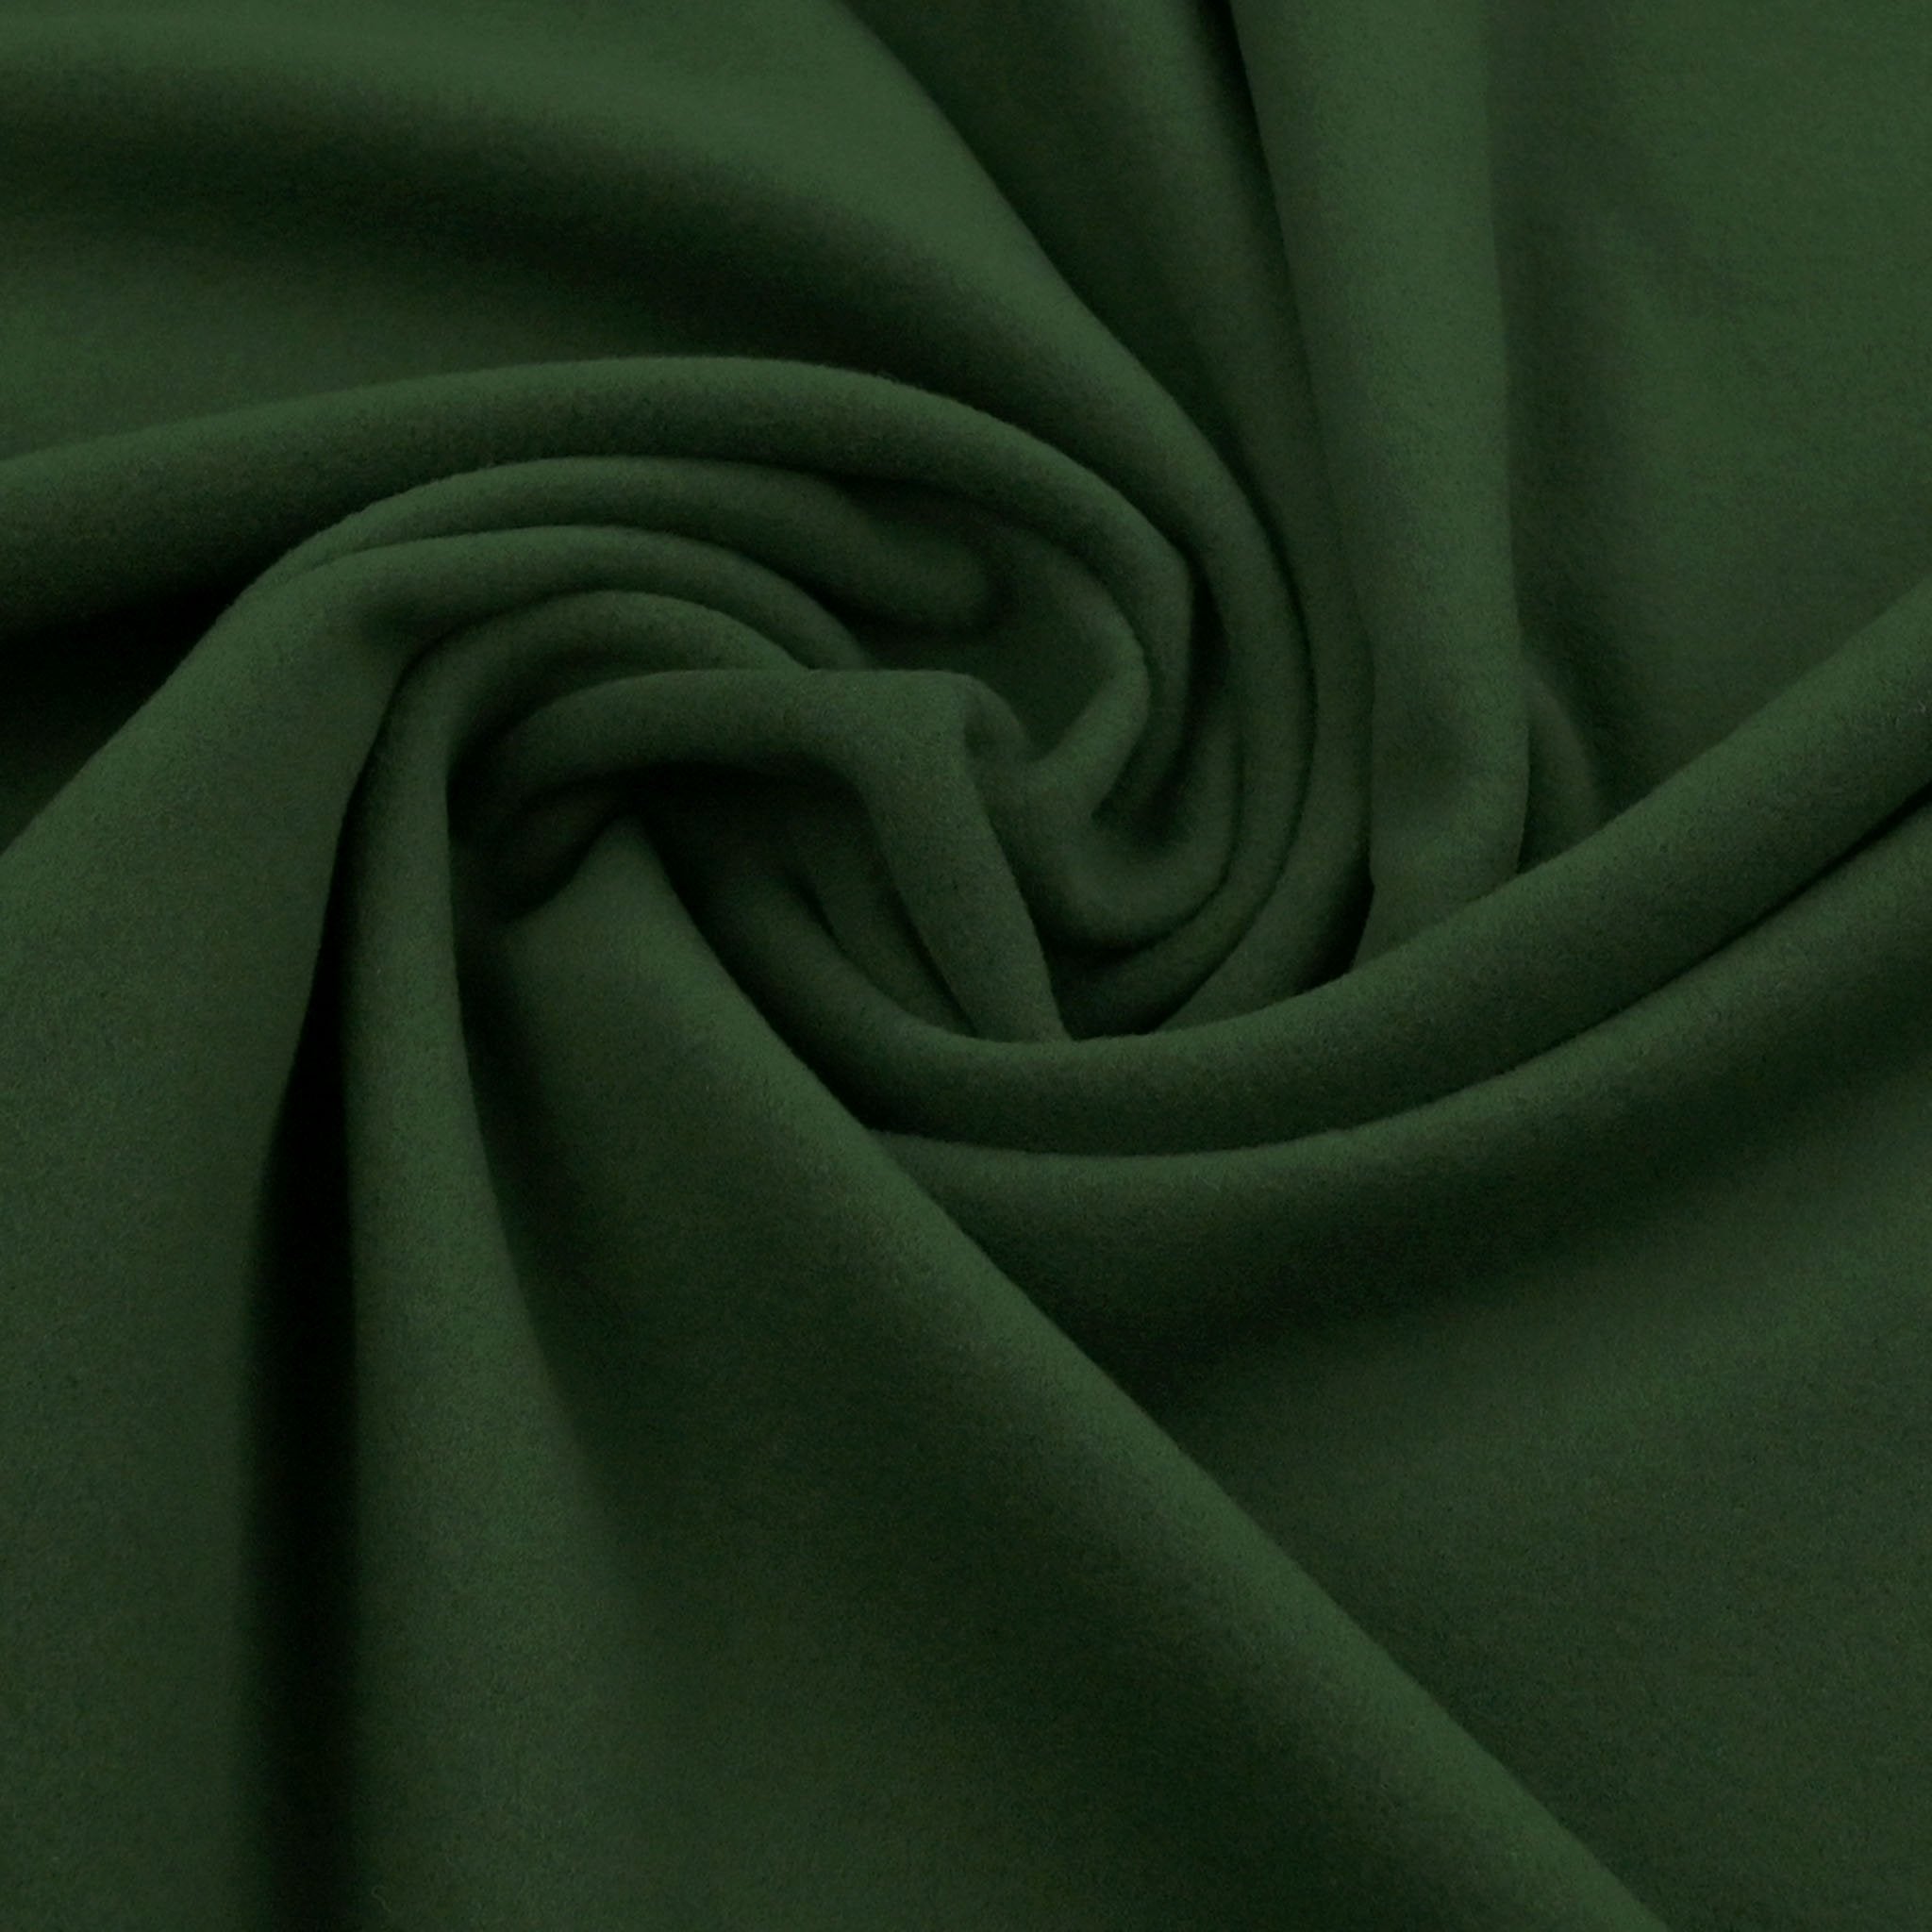 Green Coating Fabric 98794